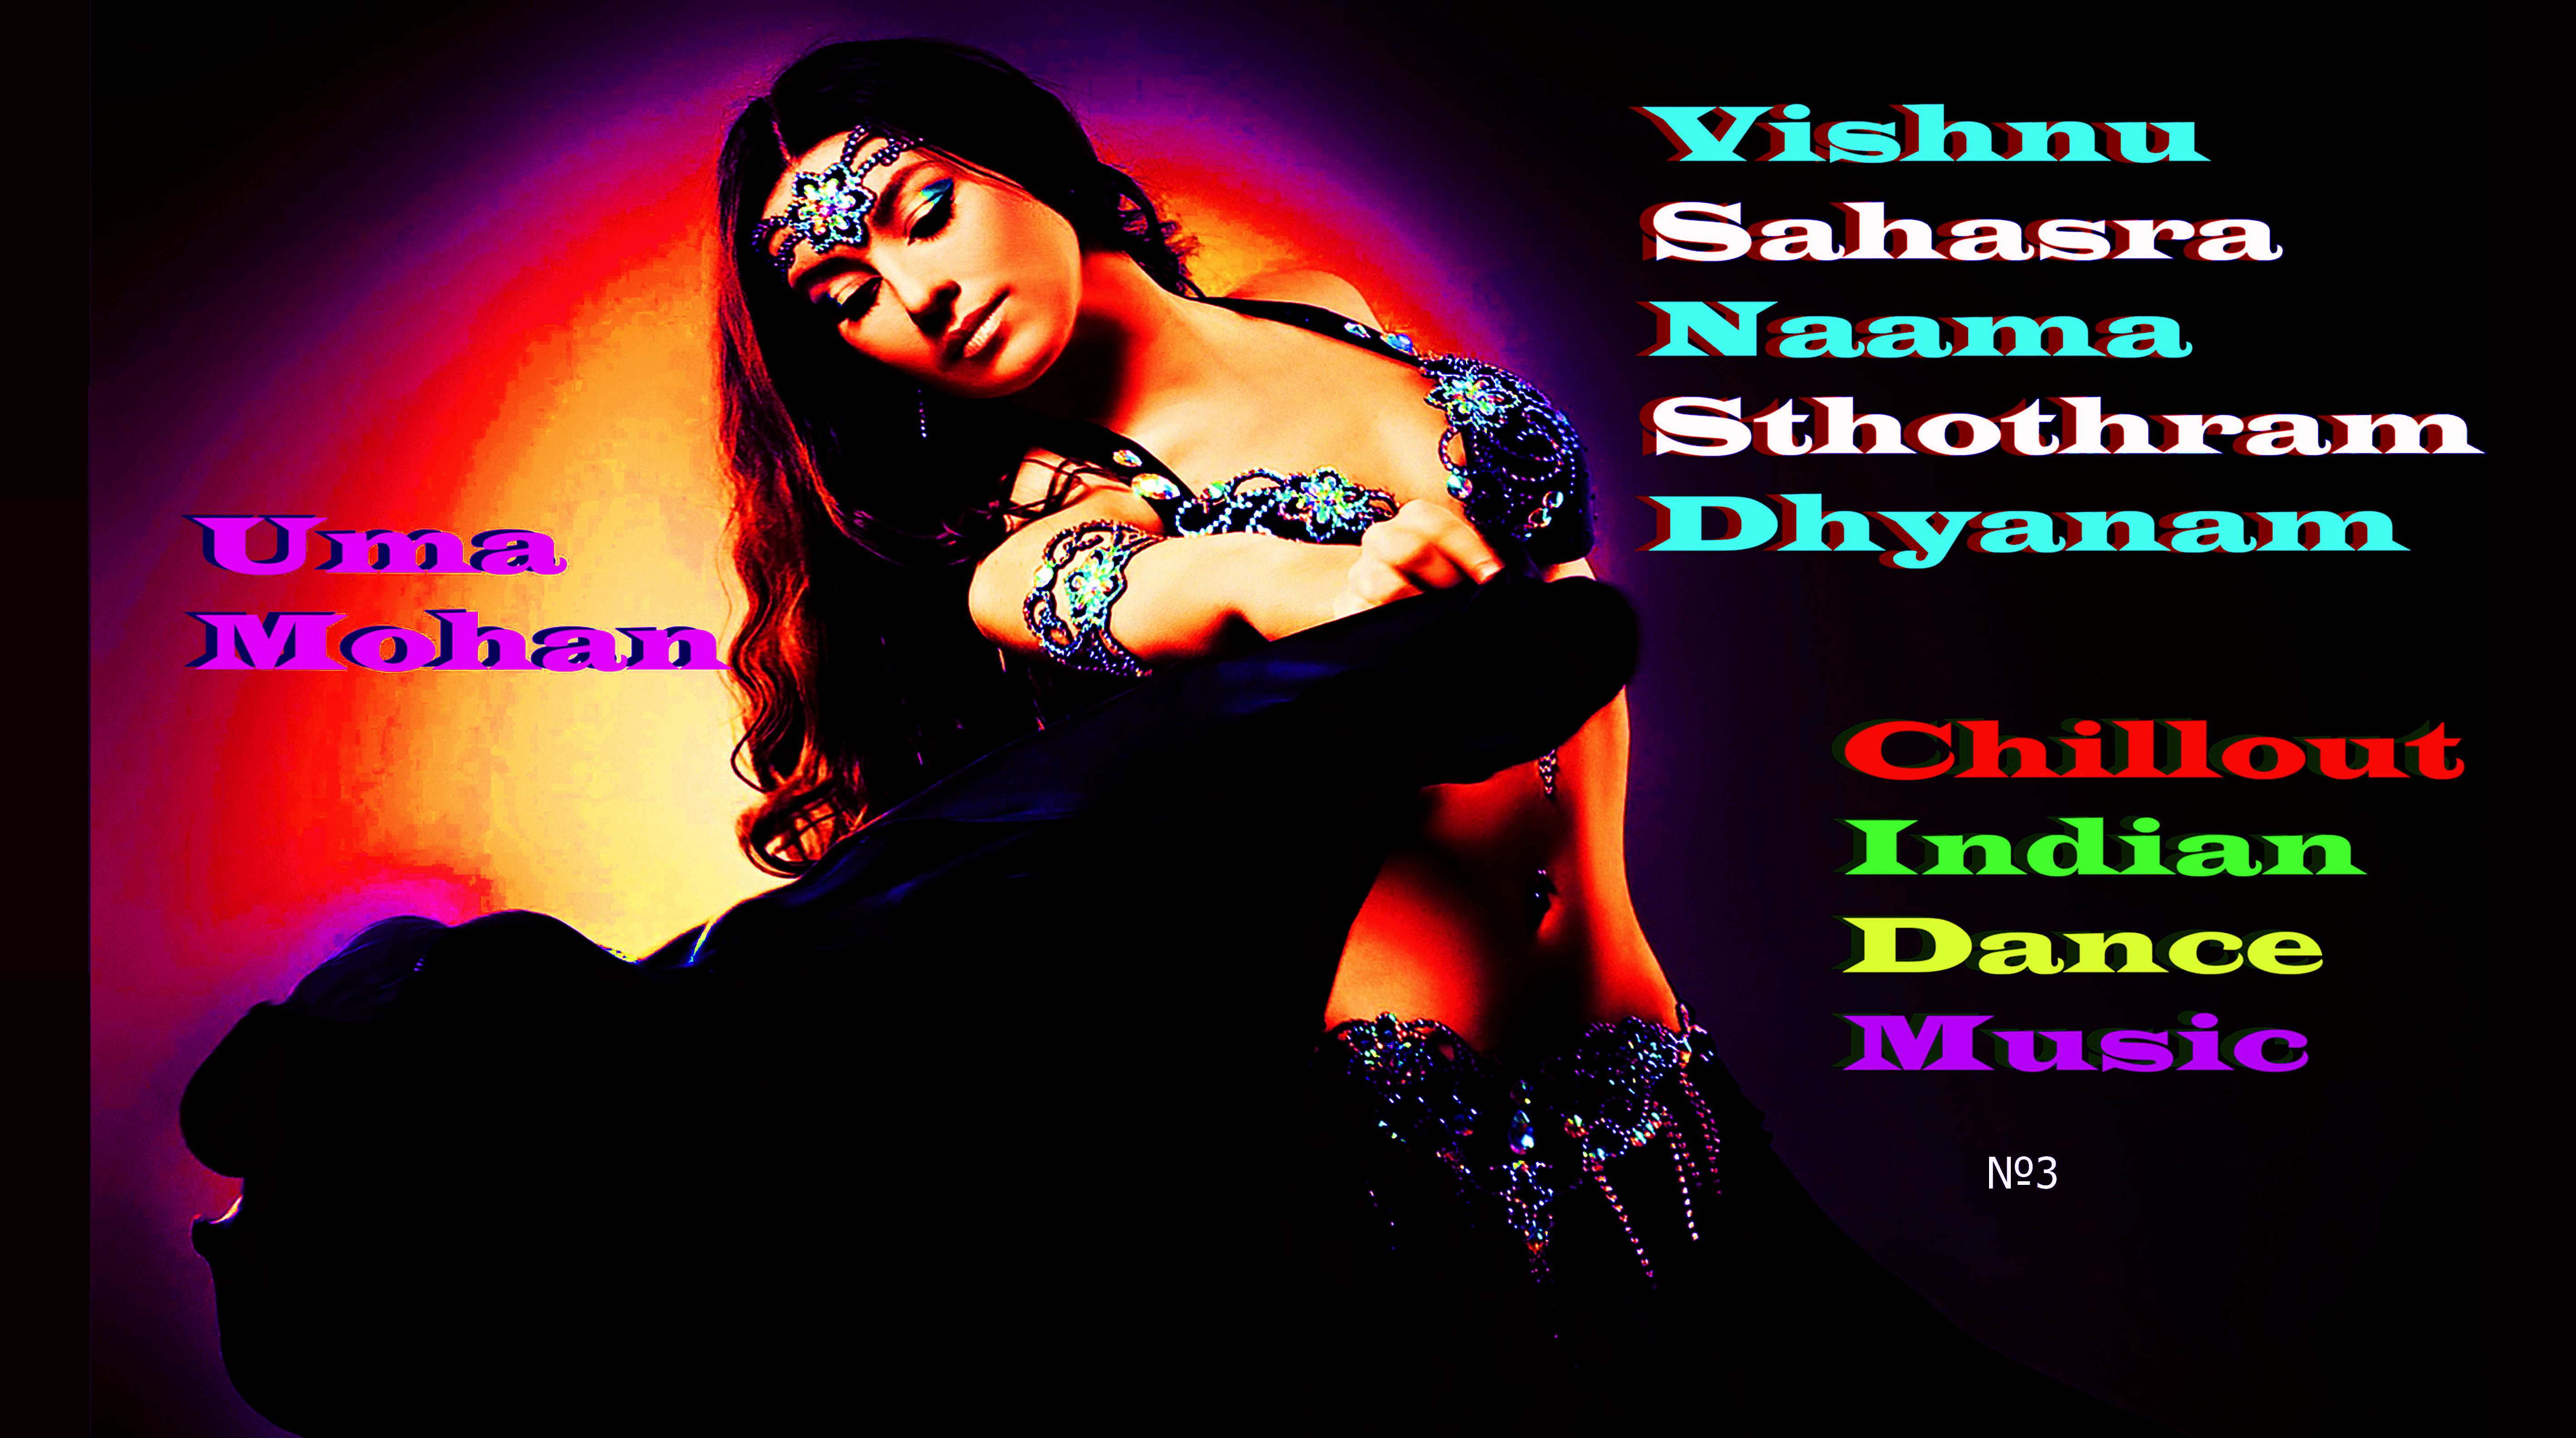 Uma Mohan - Vishnu Sahasra Naama Sthothram Dhyanam ( Chillout, Indian Dance Music, №3 ) Чилаут, #22